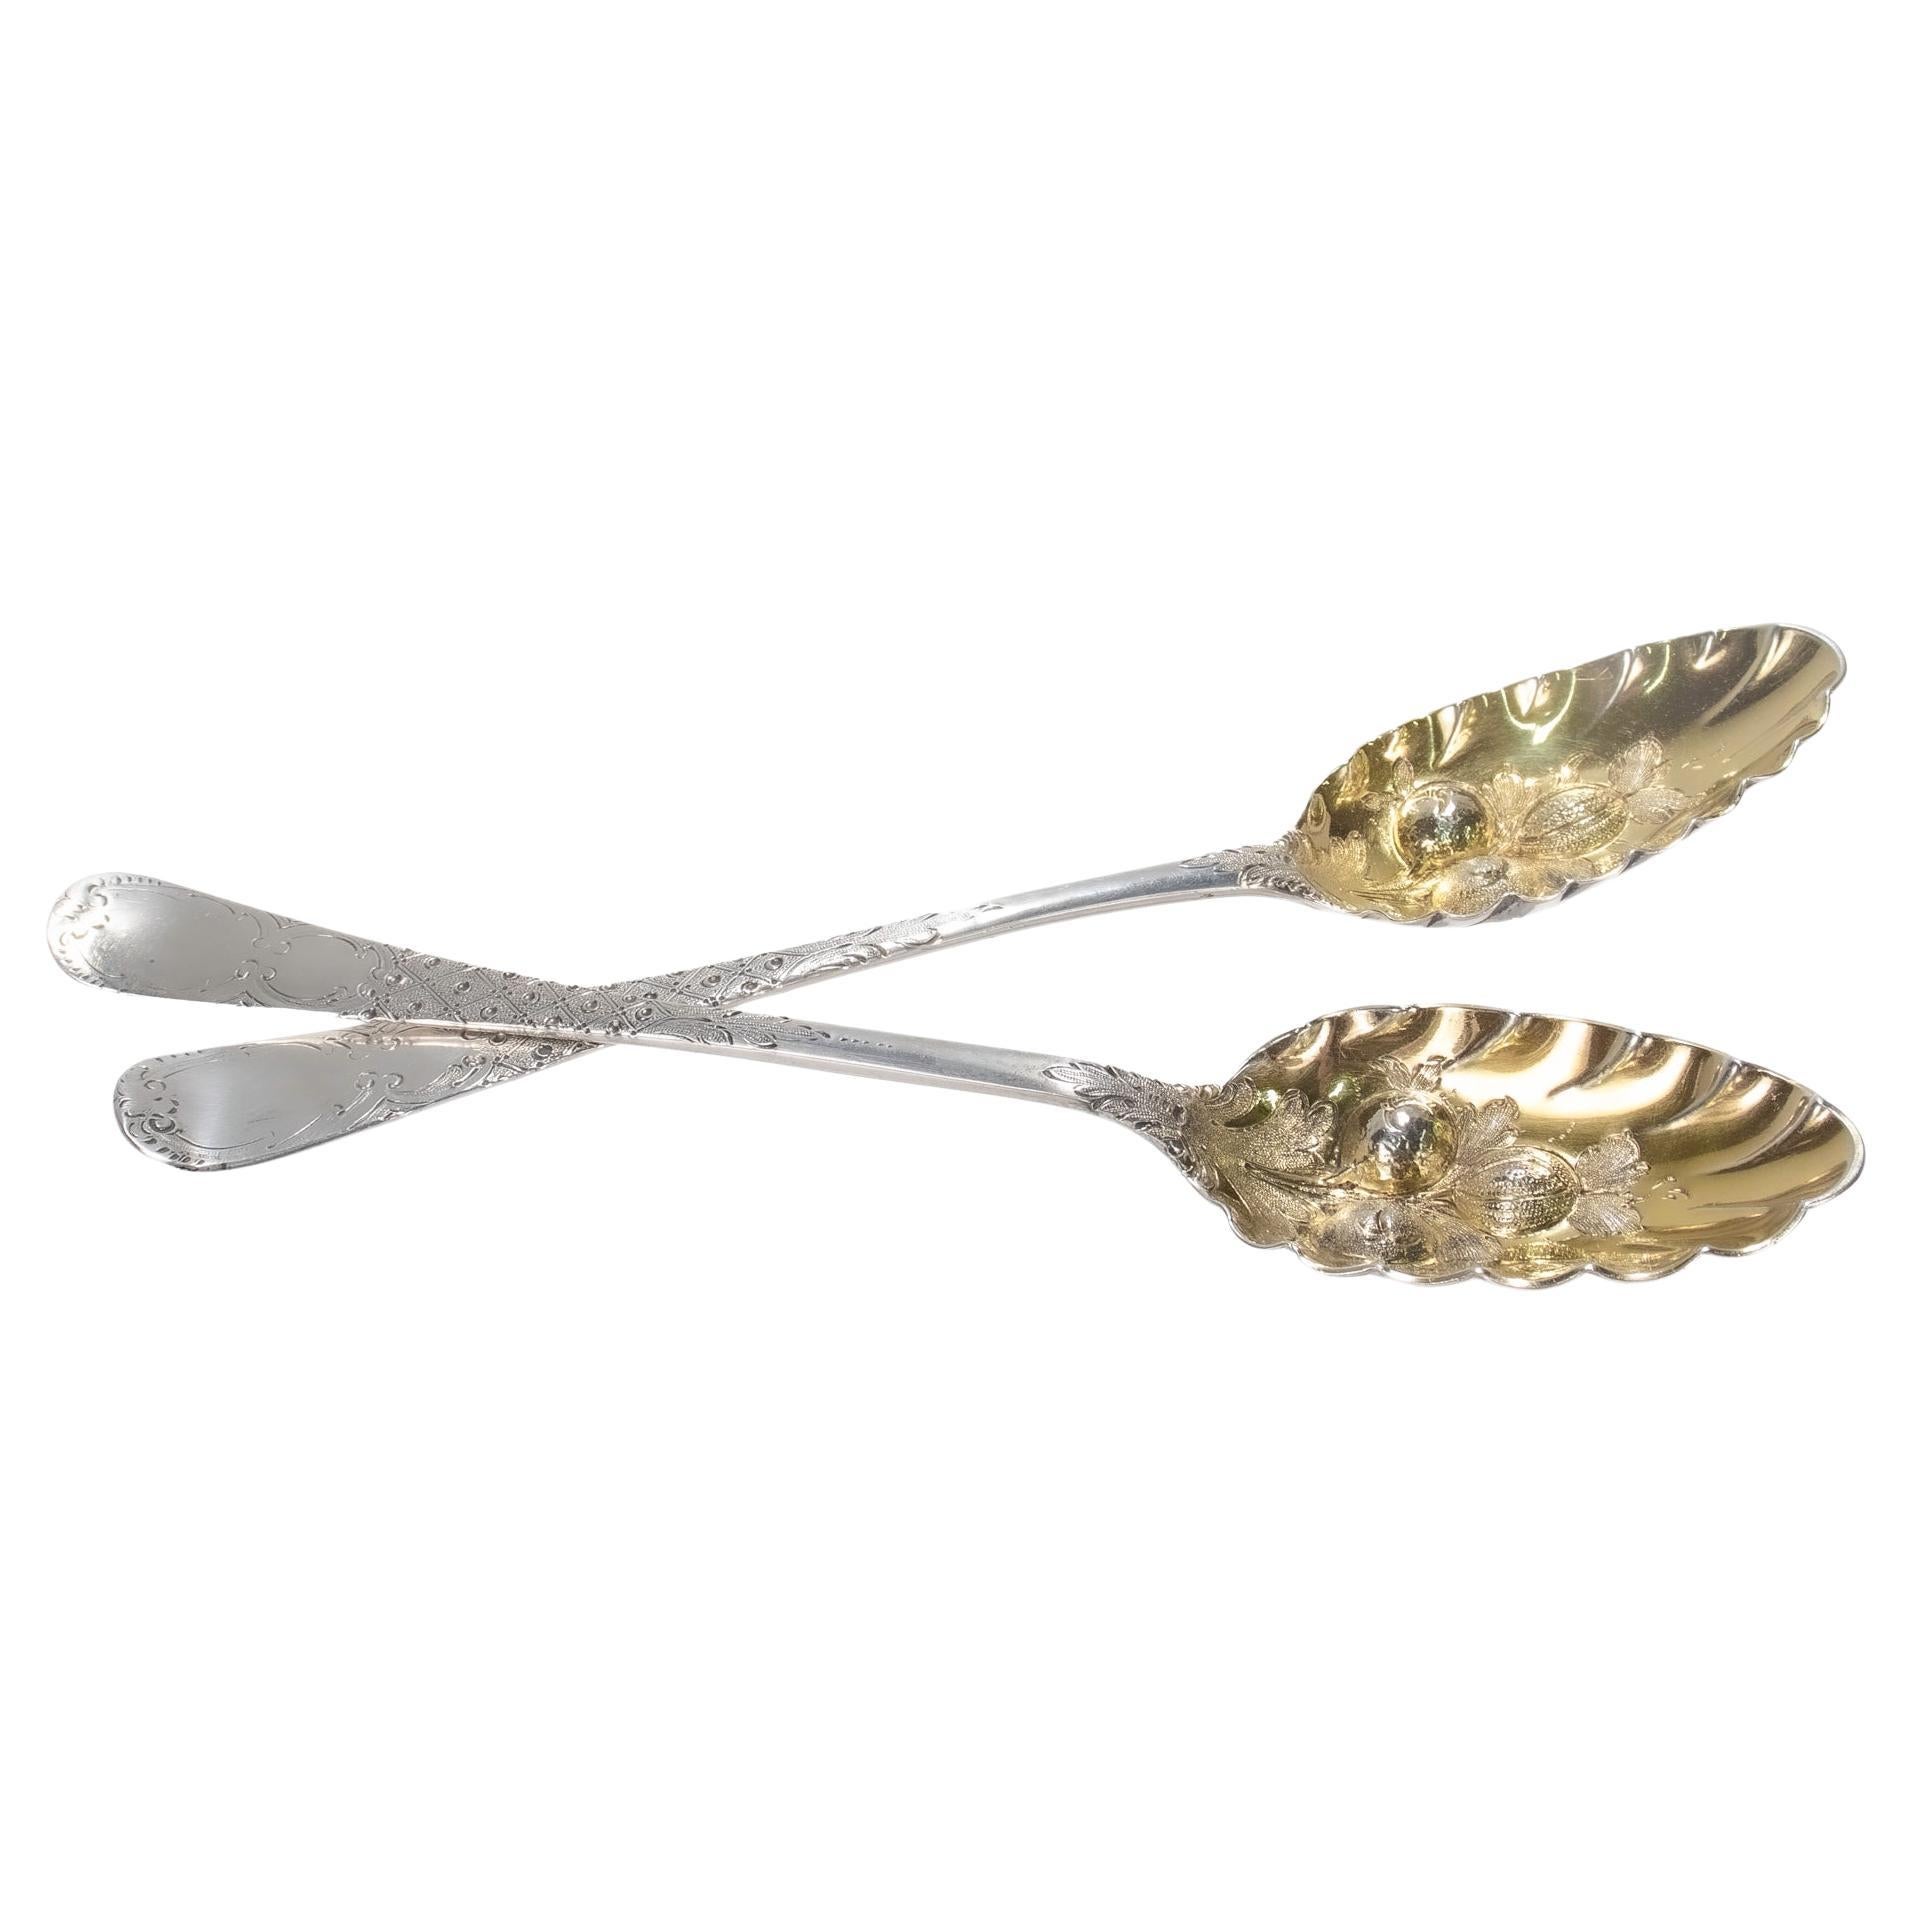 Antique Near Pair of Georgian Sterling Silver Gilt Decorated Berry Spoons (Paire de cuillères à fruits)